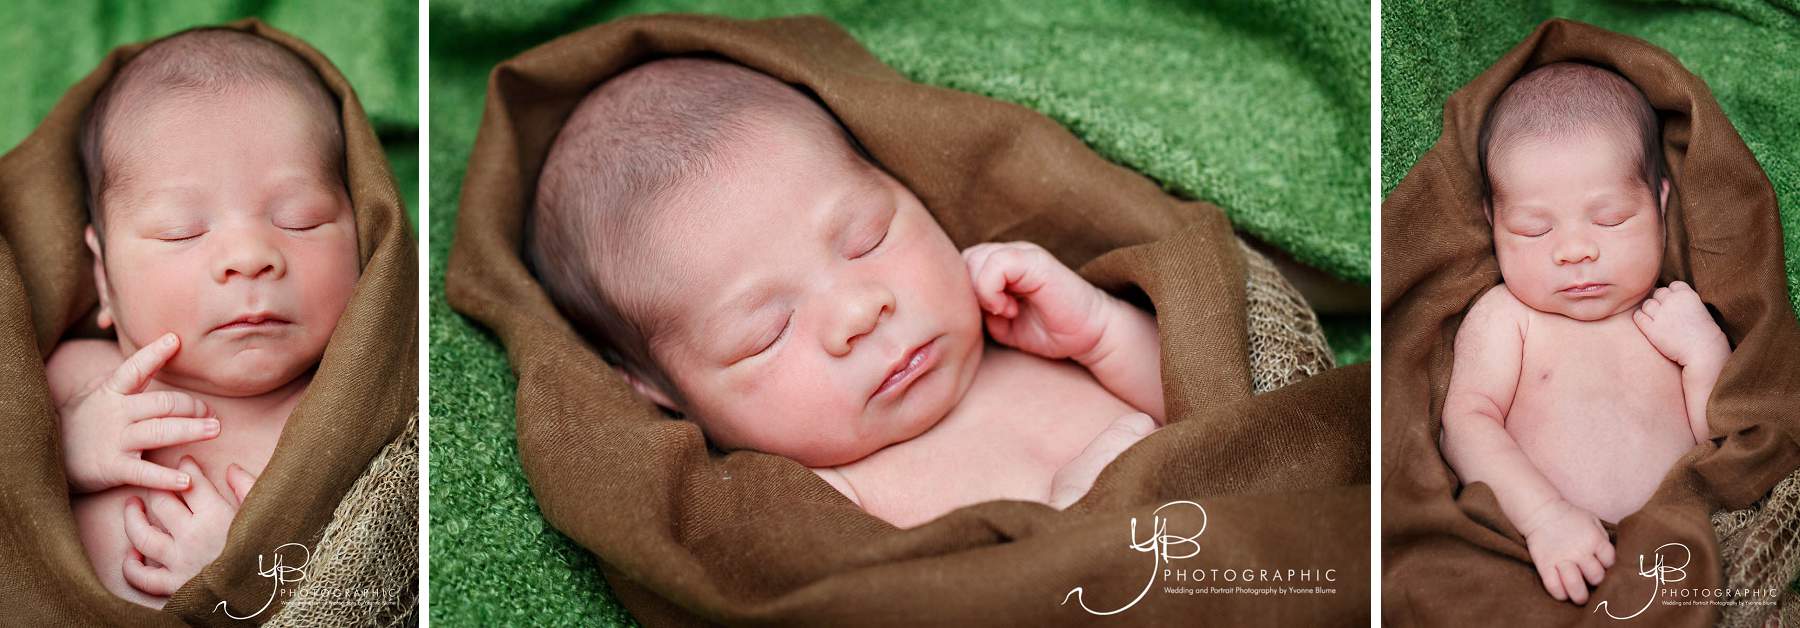 Newborn Baby Photos by YBPHOTOGRAPHIC